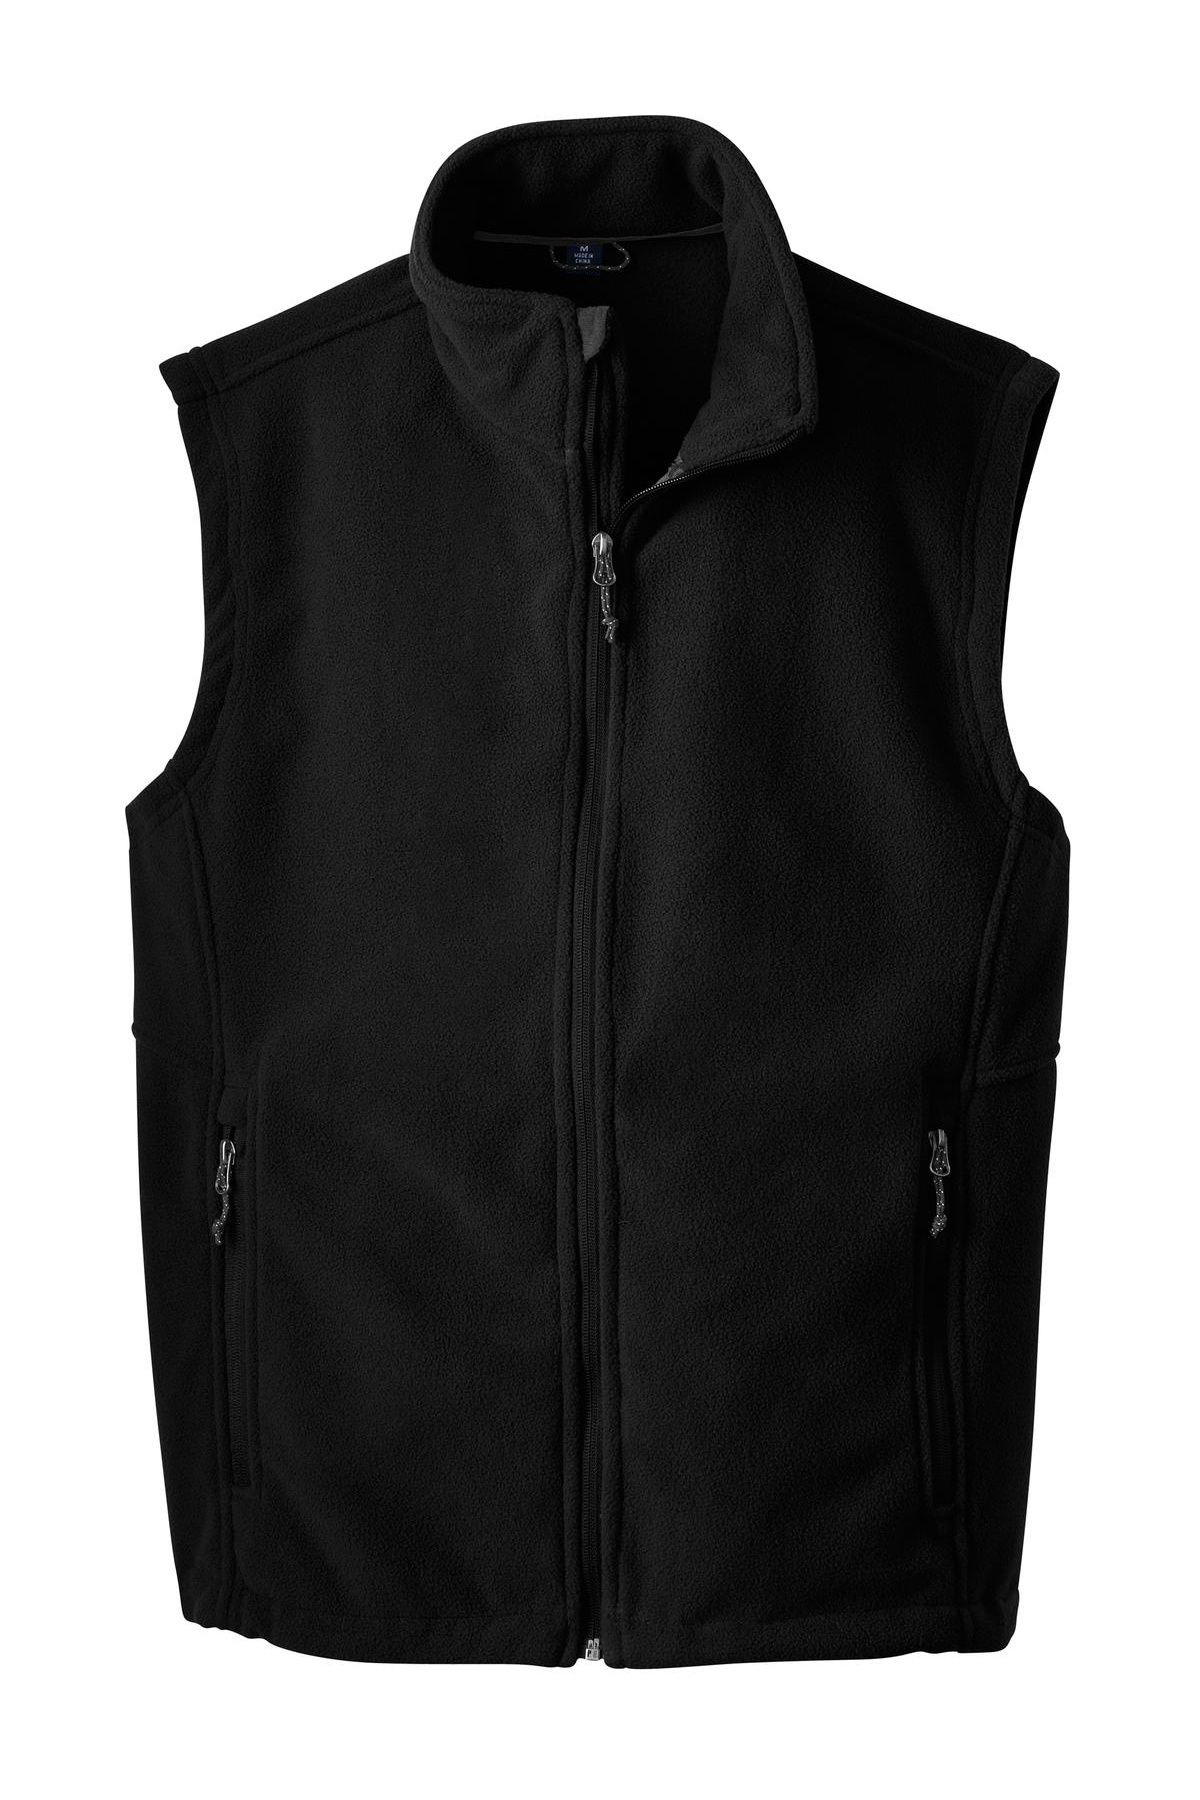 Port Authority Value Fleece Jacket, Product